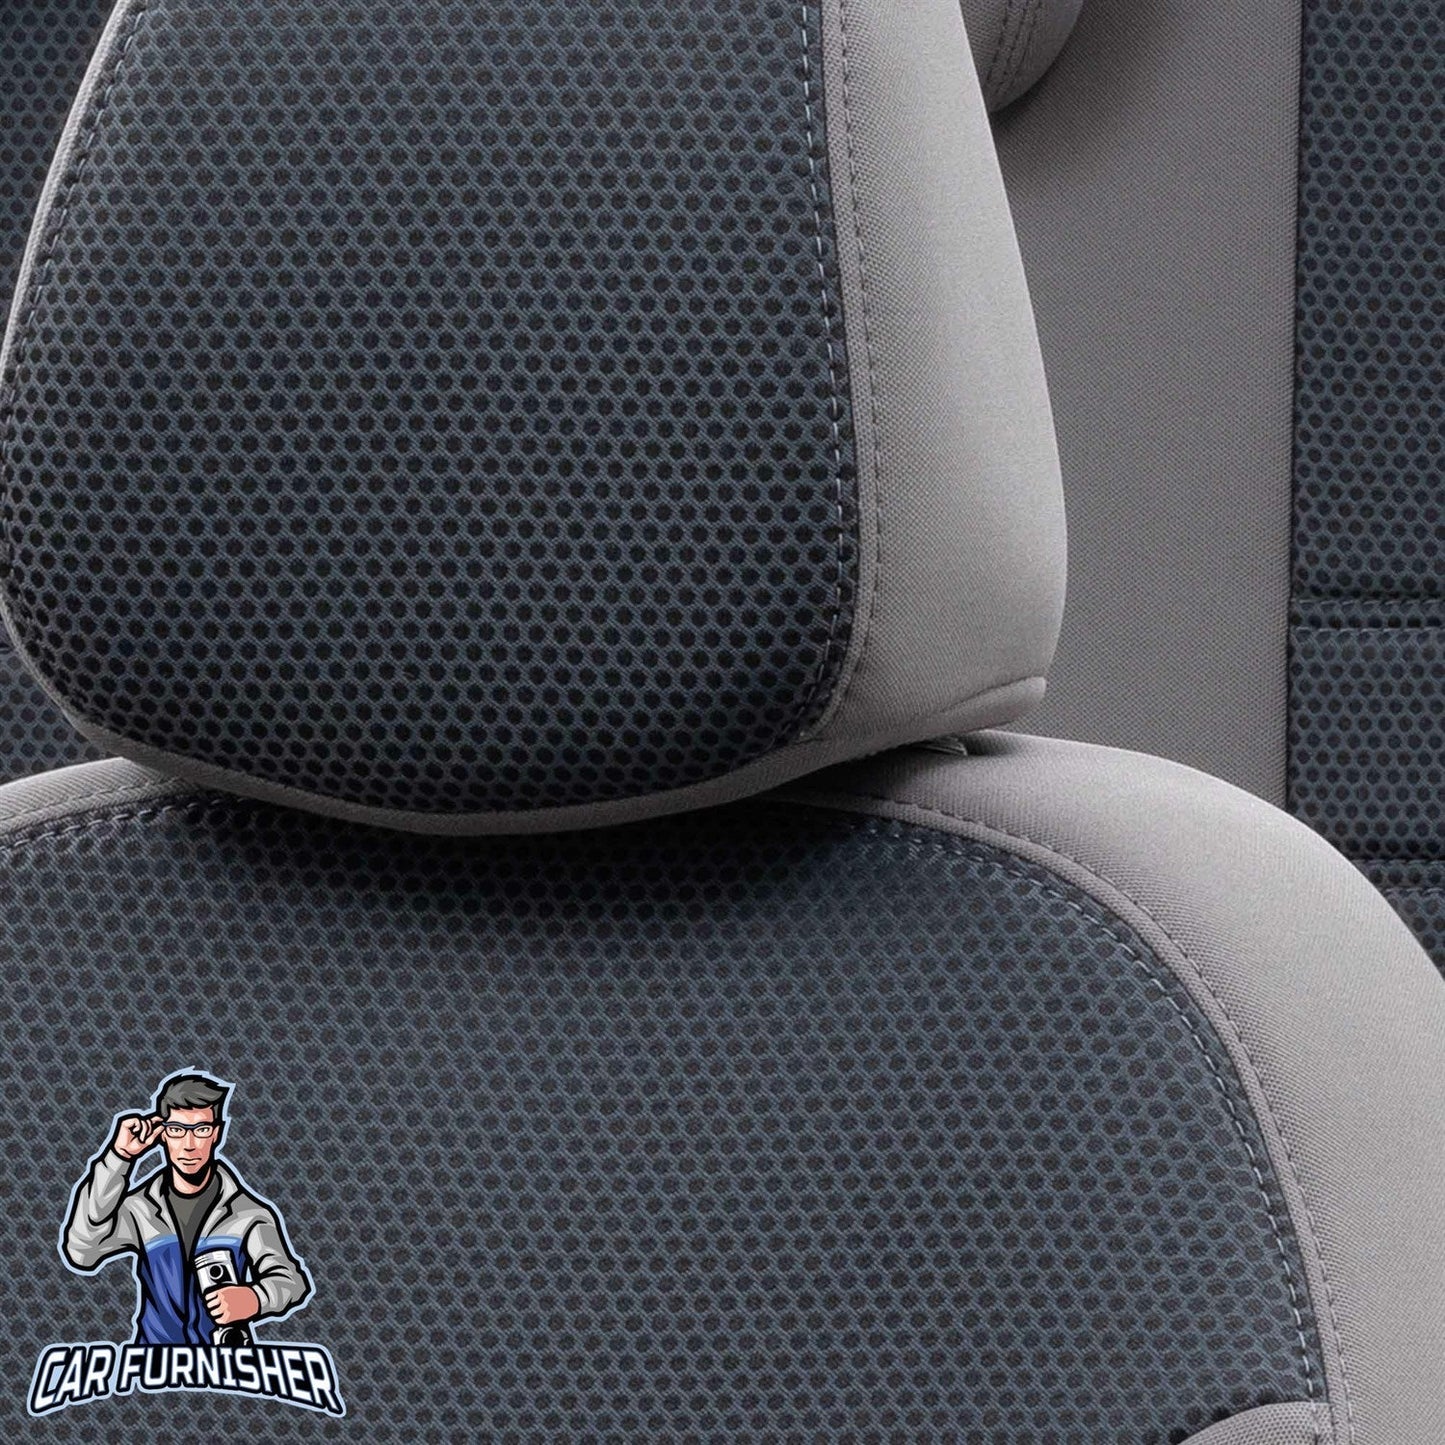 Ford C-Max Seat Covers Original Jacquard Design Smoked Jacquard Fabric